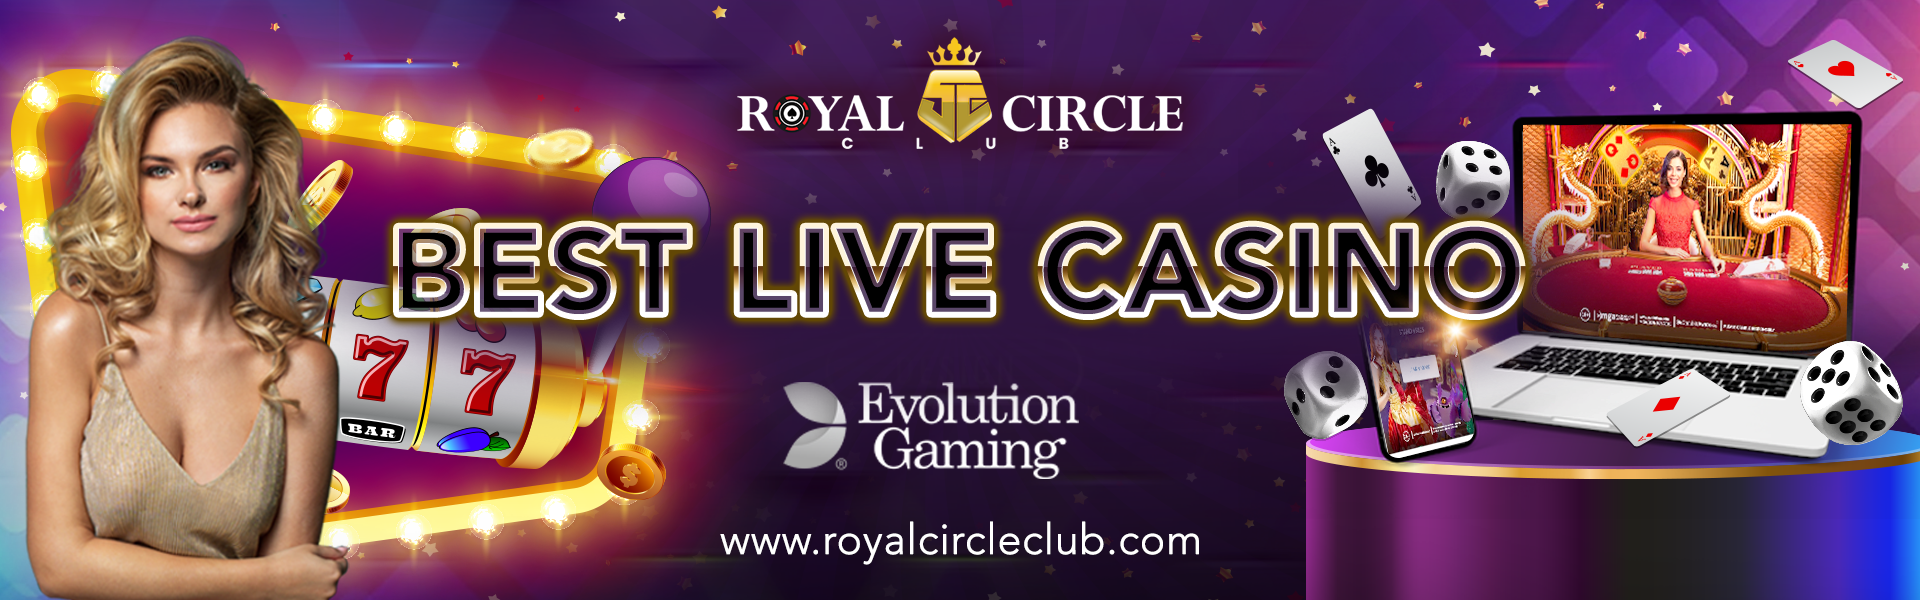 Royal Circle Club - Welcome 4 - royalcc1.com